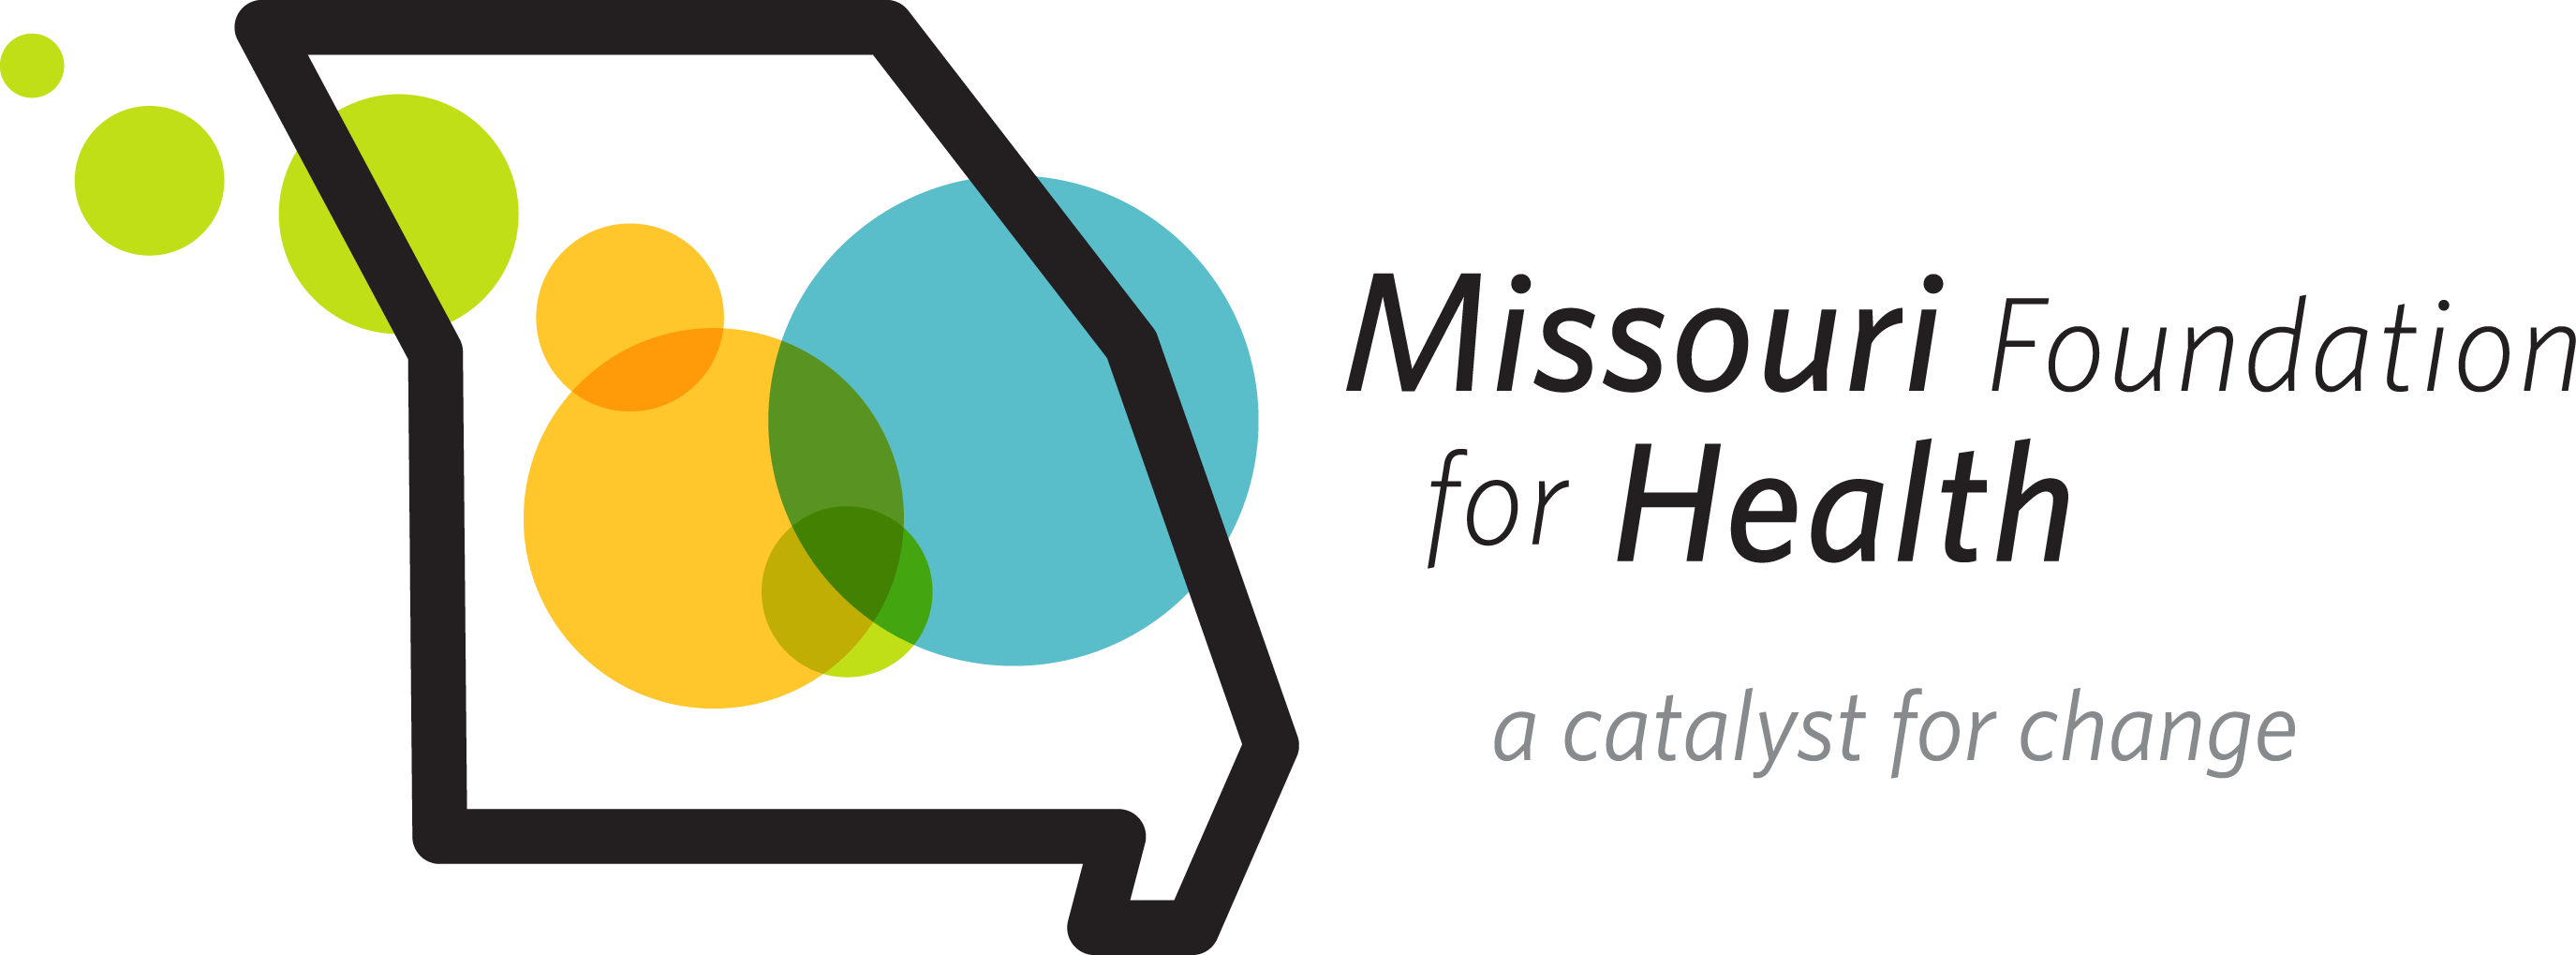 Missouri-Foundation-for-Health-Logo-Color-Horizontal-Tagline